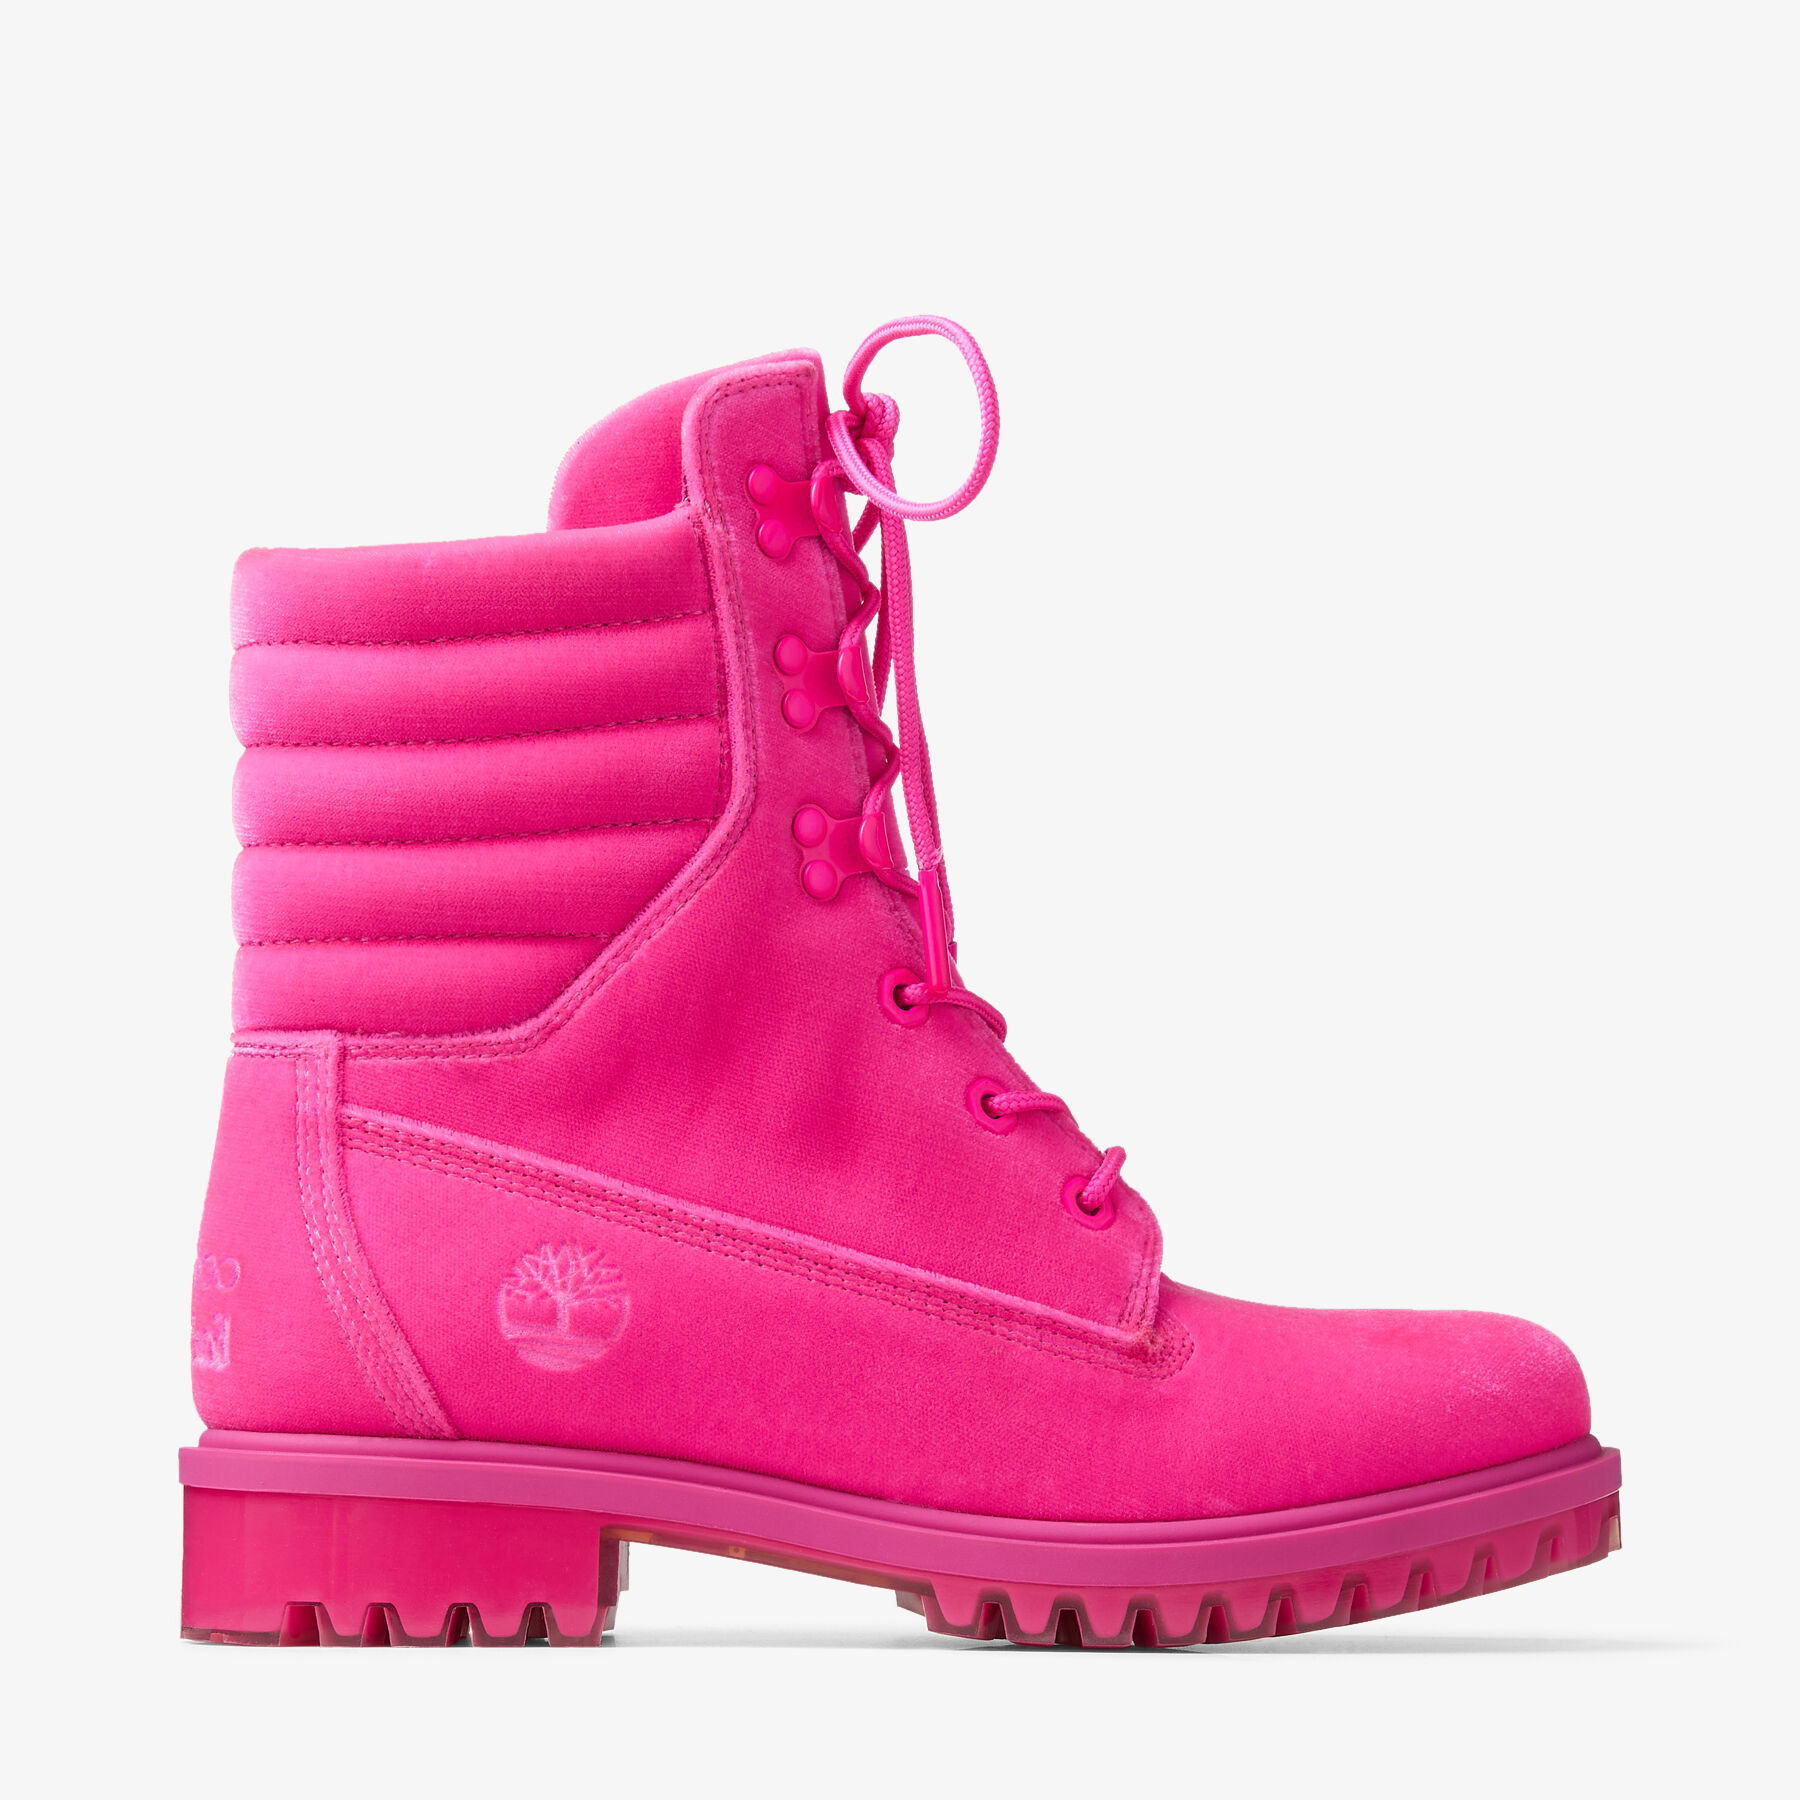 vergeven nationalisme vuist Hot Pink Timberland Velvet Ankle Boots | JIMMY CHOO X TIMBERLAND 8 INCH  PUFFER BOOT | Jimmy Choo x Timberland Collection | JIMMY CHOO